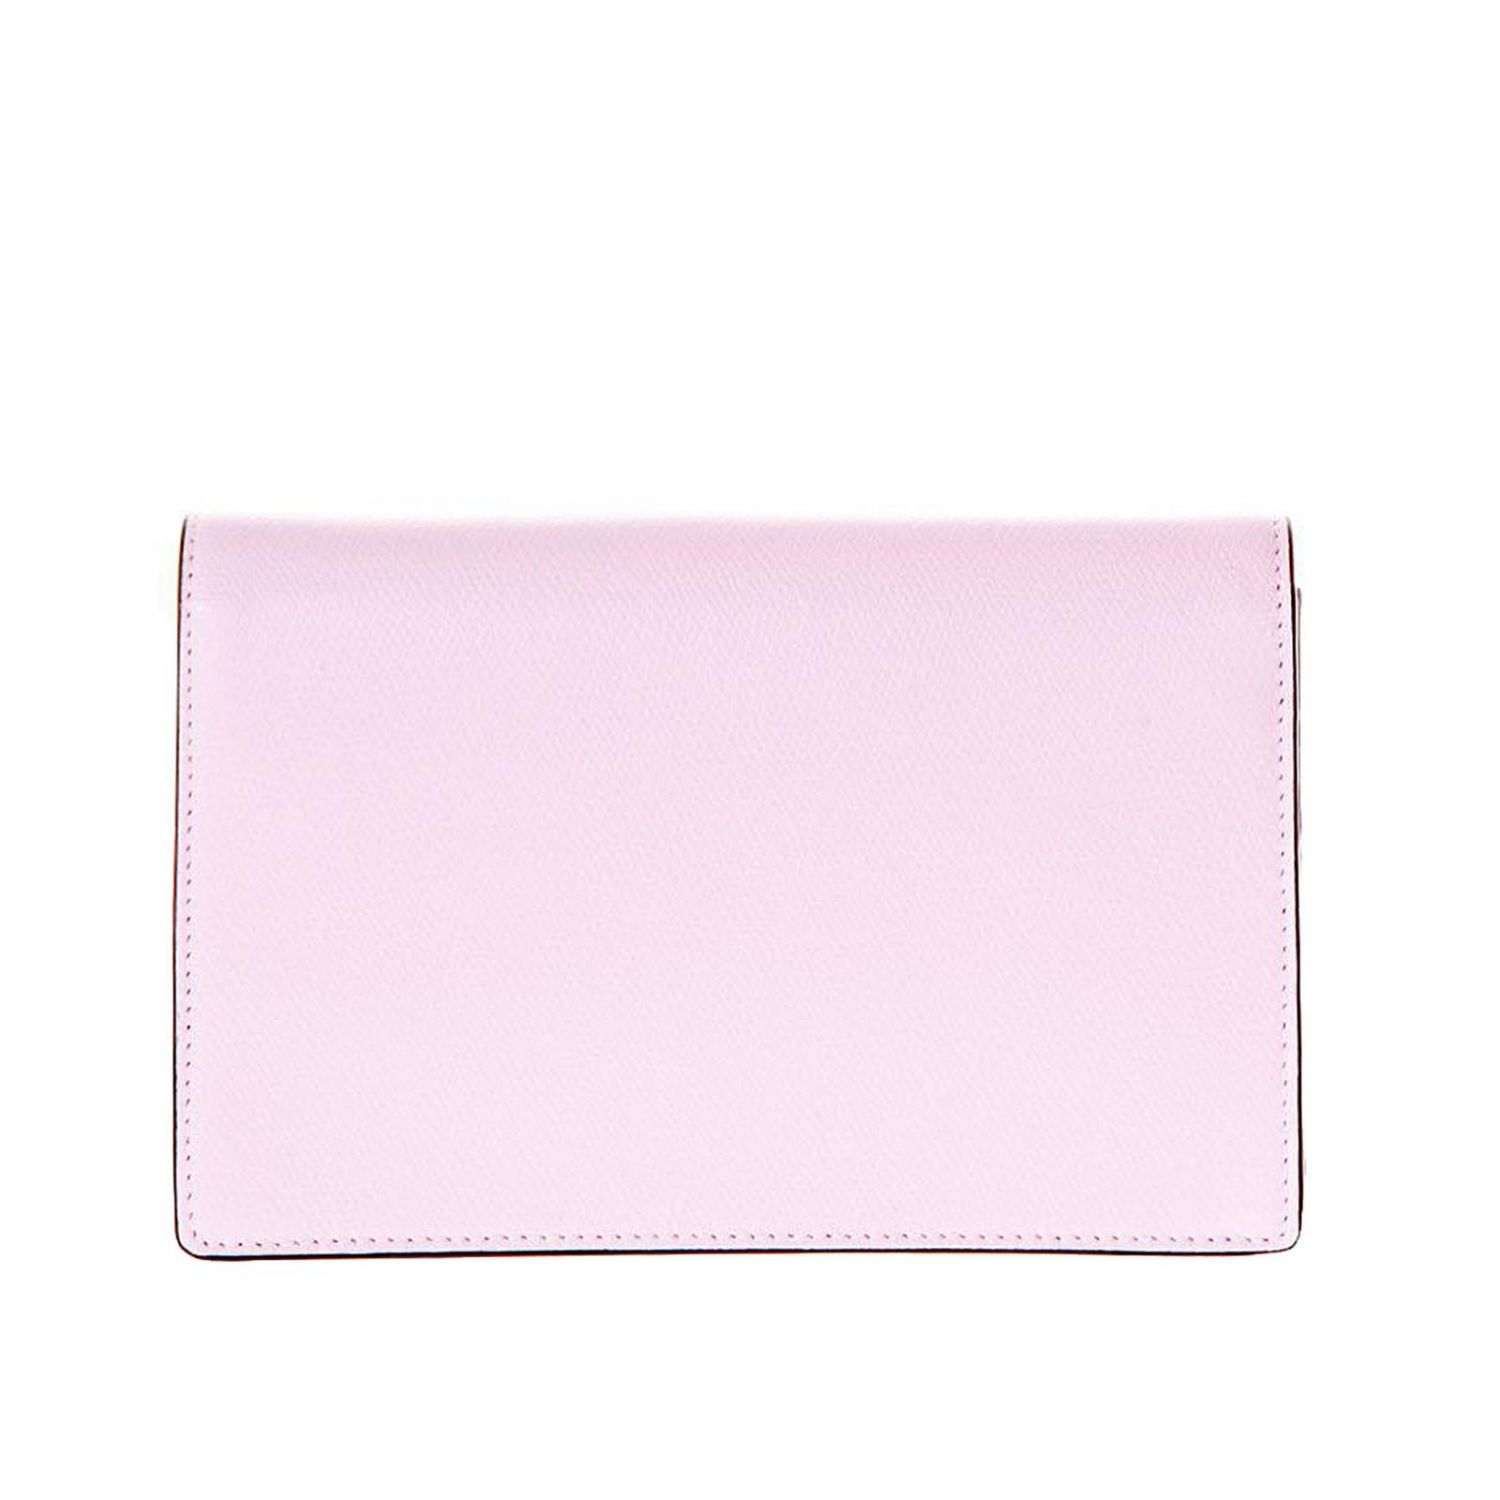 FENDI: Handbag women | Handbag Fendi Women Pink | Handbag Fendi 8BS006 ...